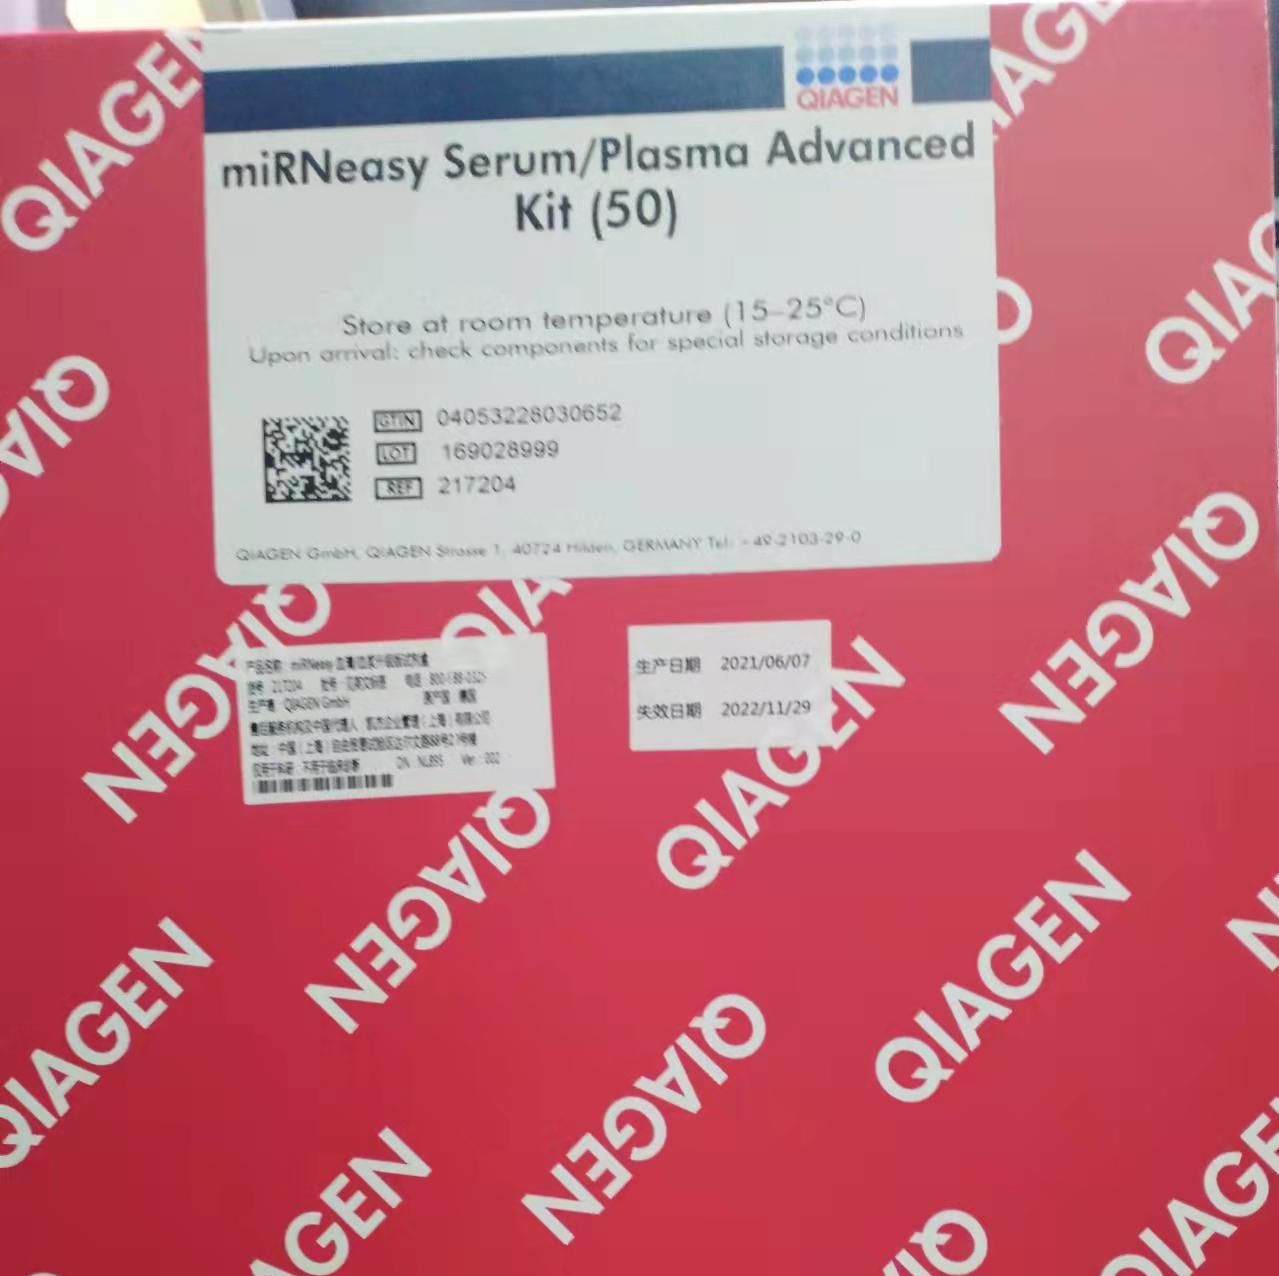 凯杰优秀代理商 QIAGEN 217204 miRNeasy Serum/Plasma Advanced Kit 